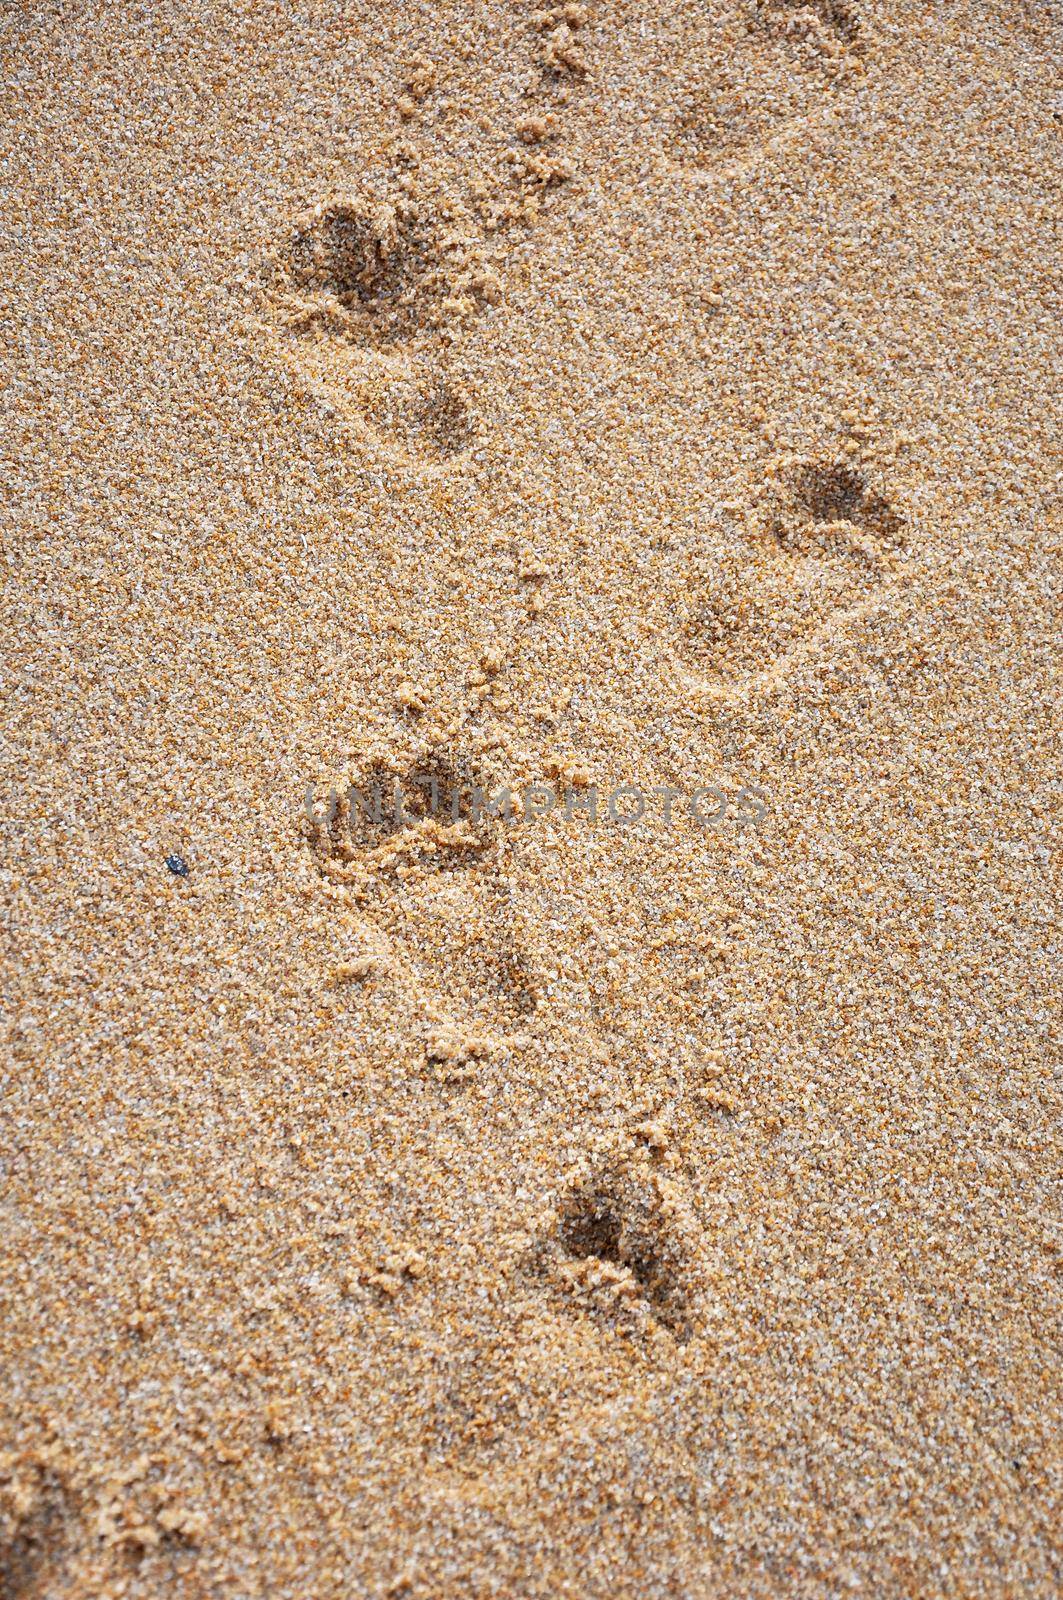 Child footprints on sand sea shore by BreakingTheWalls